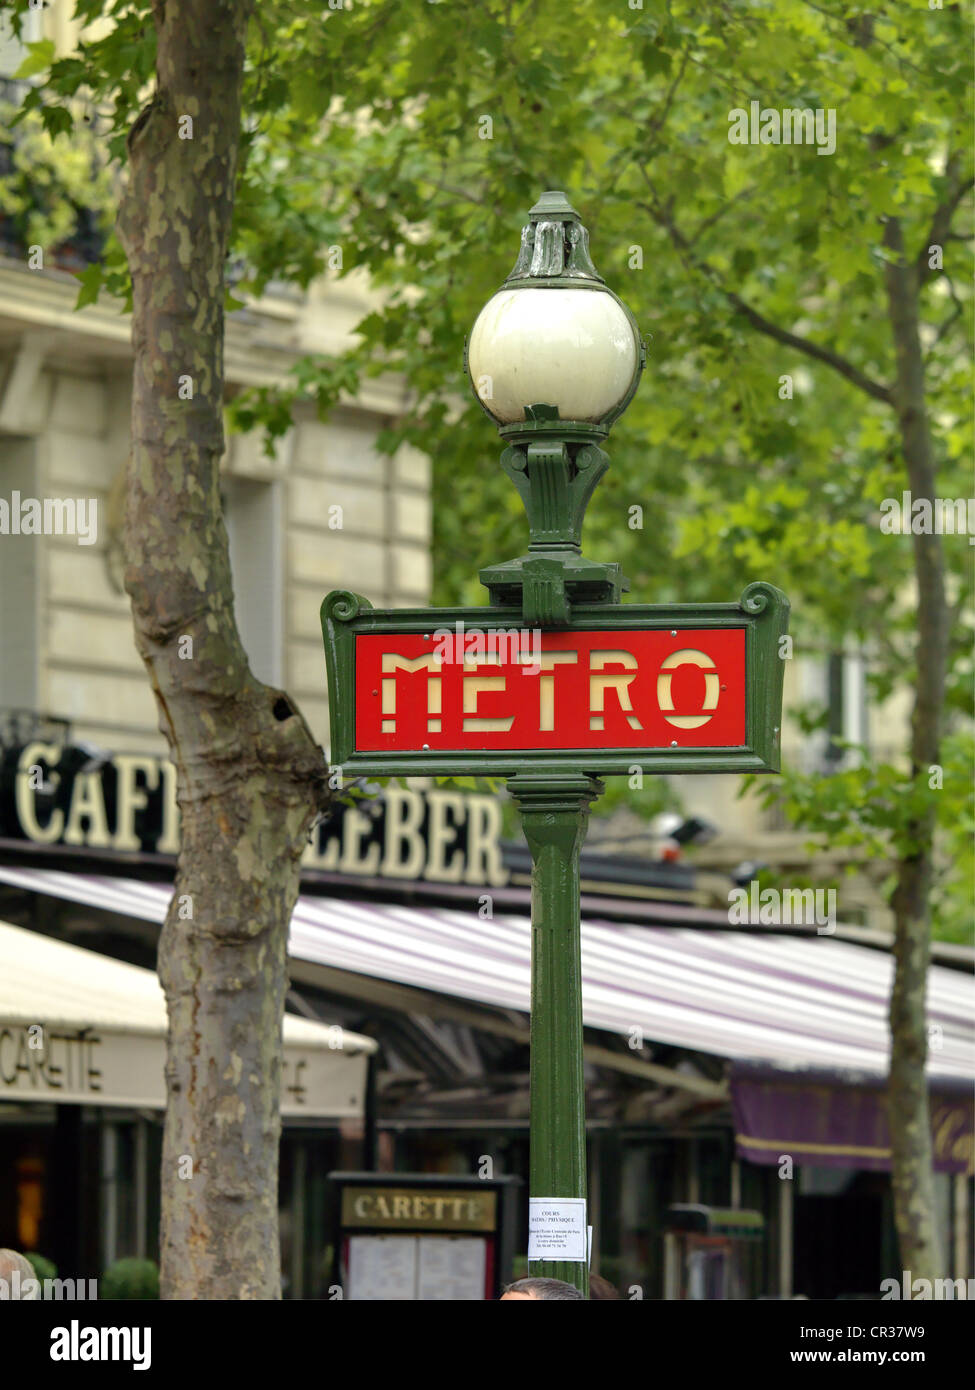 Paris Metro Zeichen Stockfoto